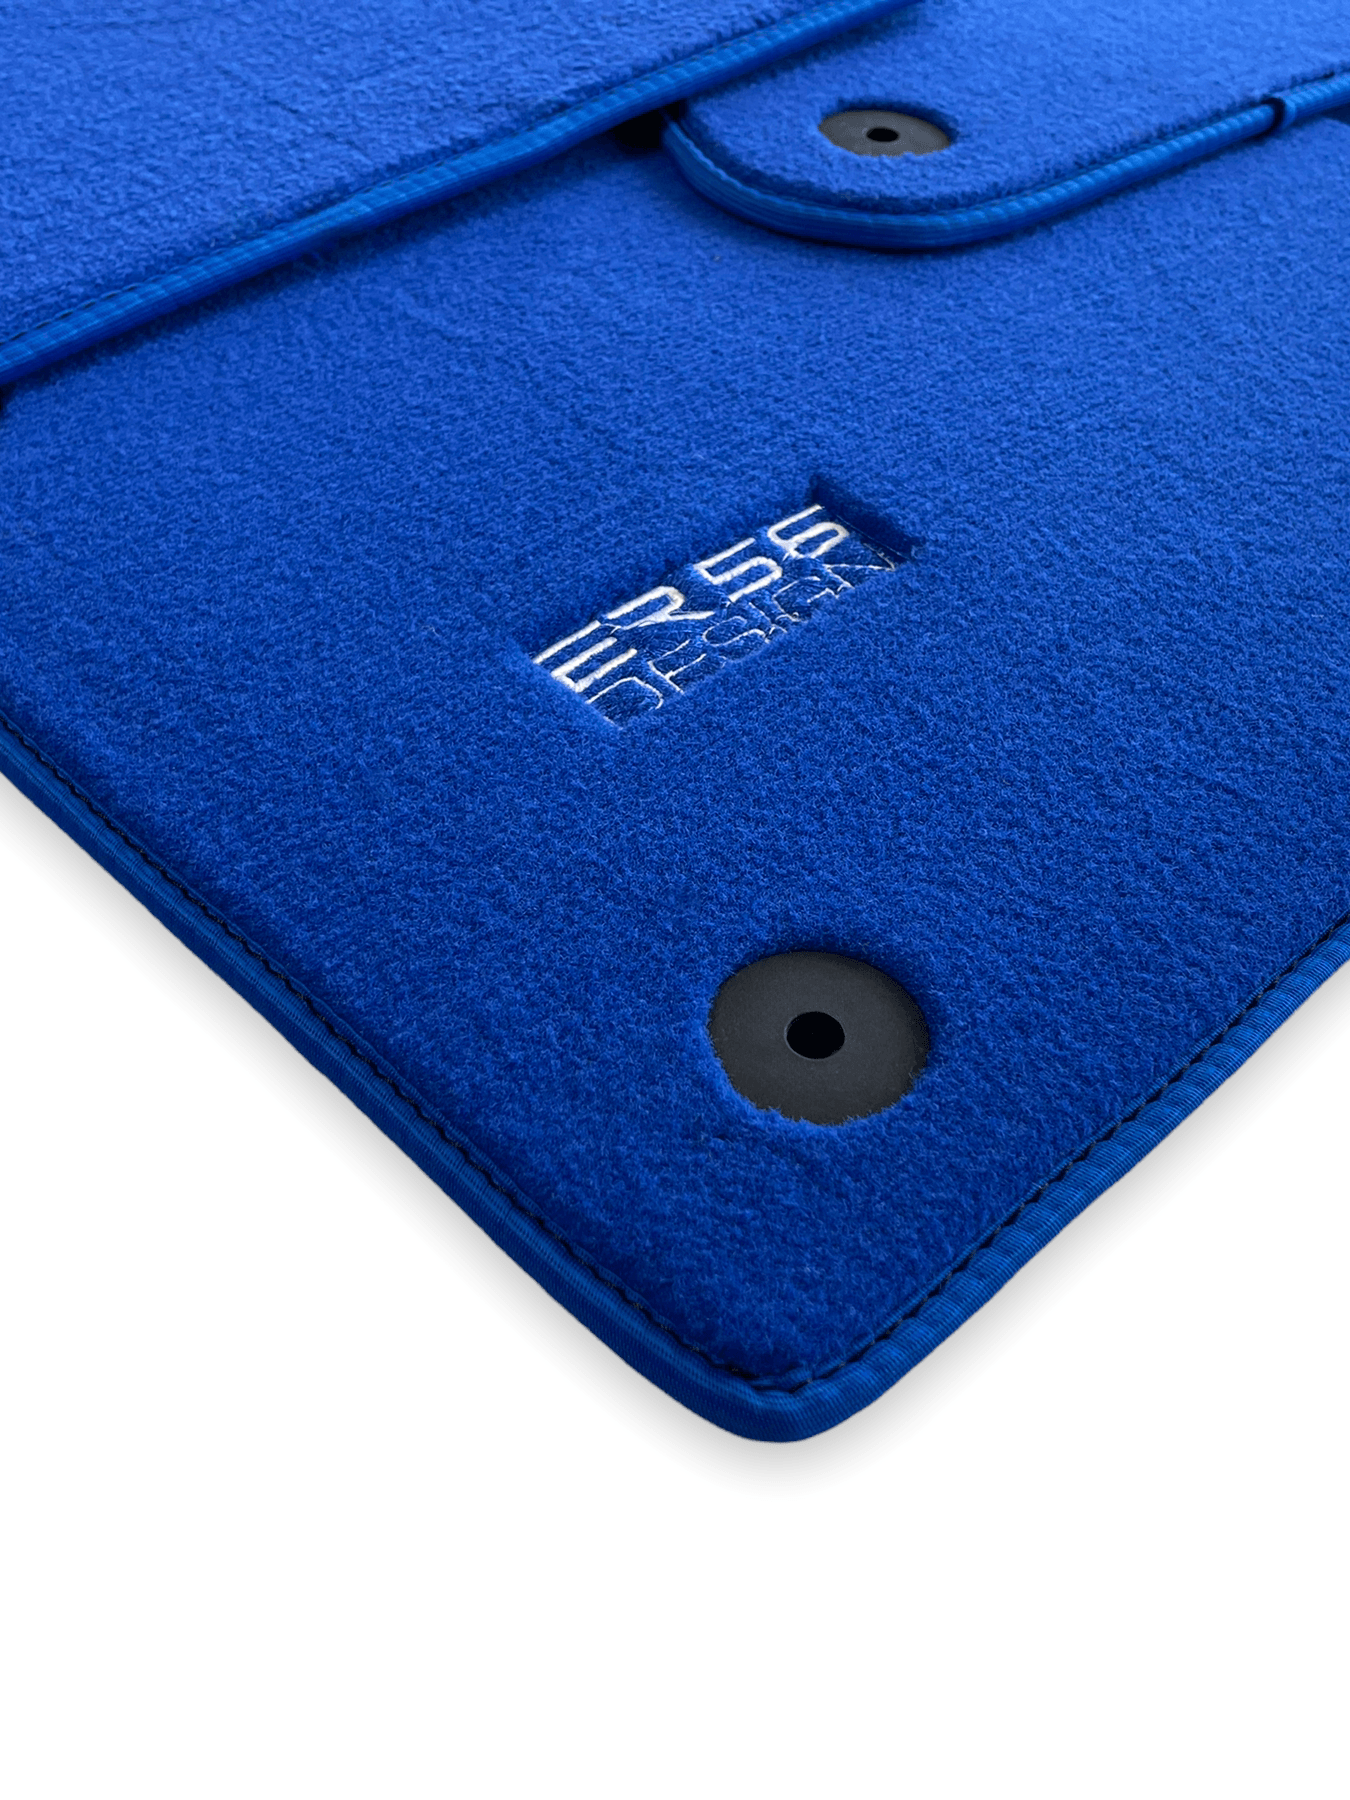 Blue Floor Mats for Audi A3 - 5-door Sportback (2021 - 2024) | ER56 Design